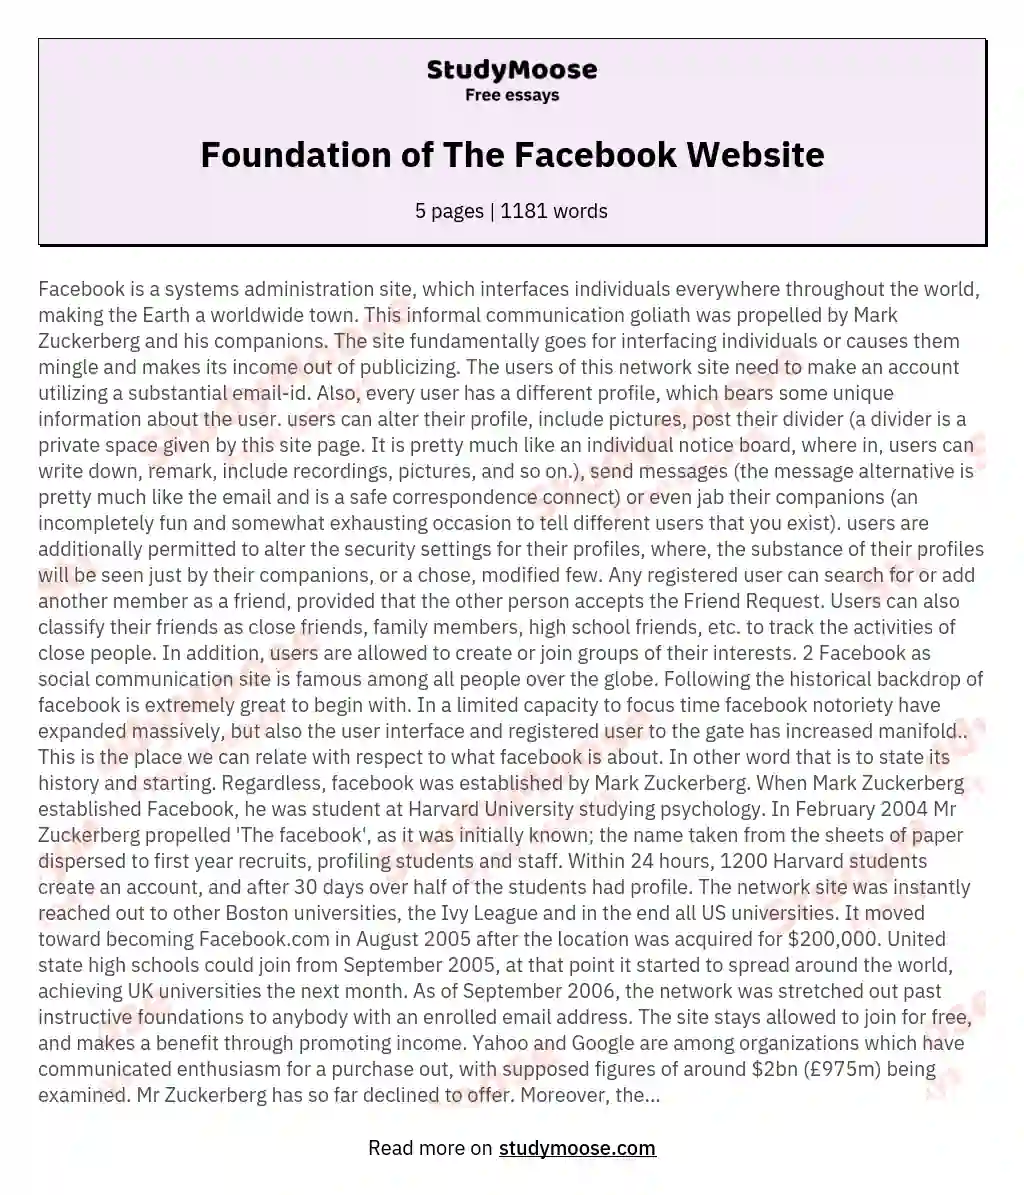 Foundation of The Facebook Website essay